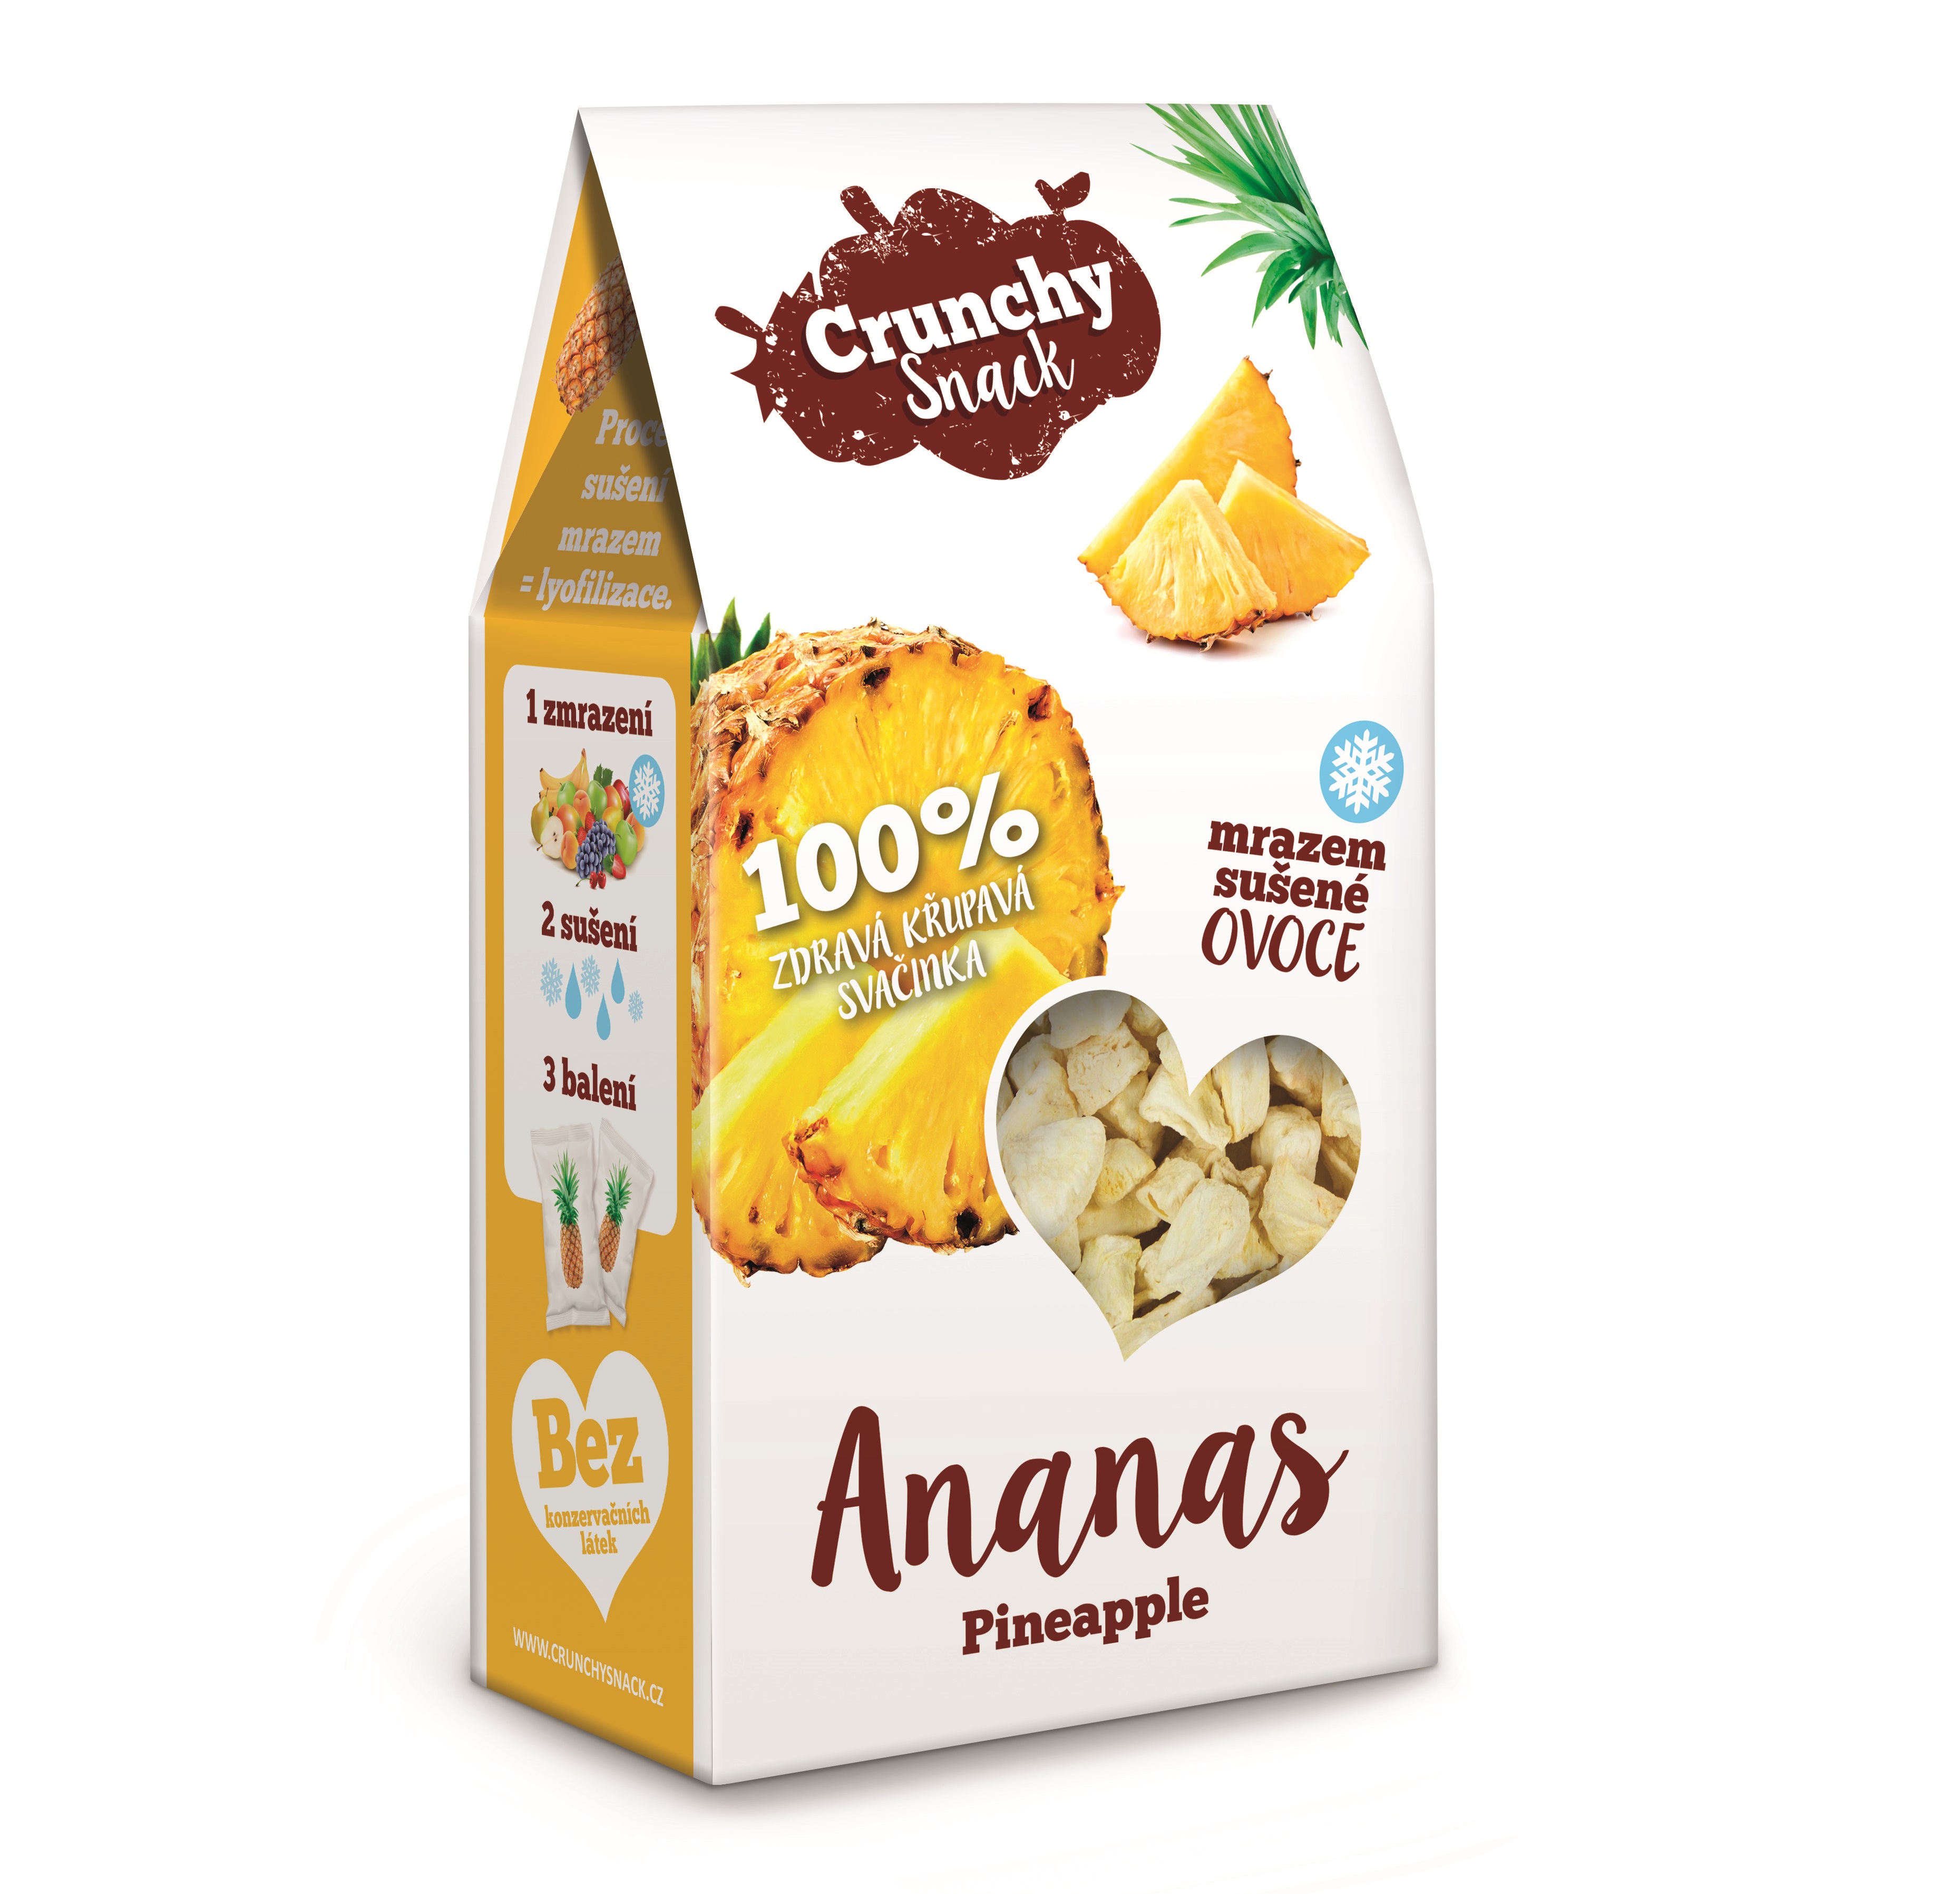 Crunchy snack Ananasct